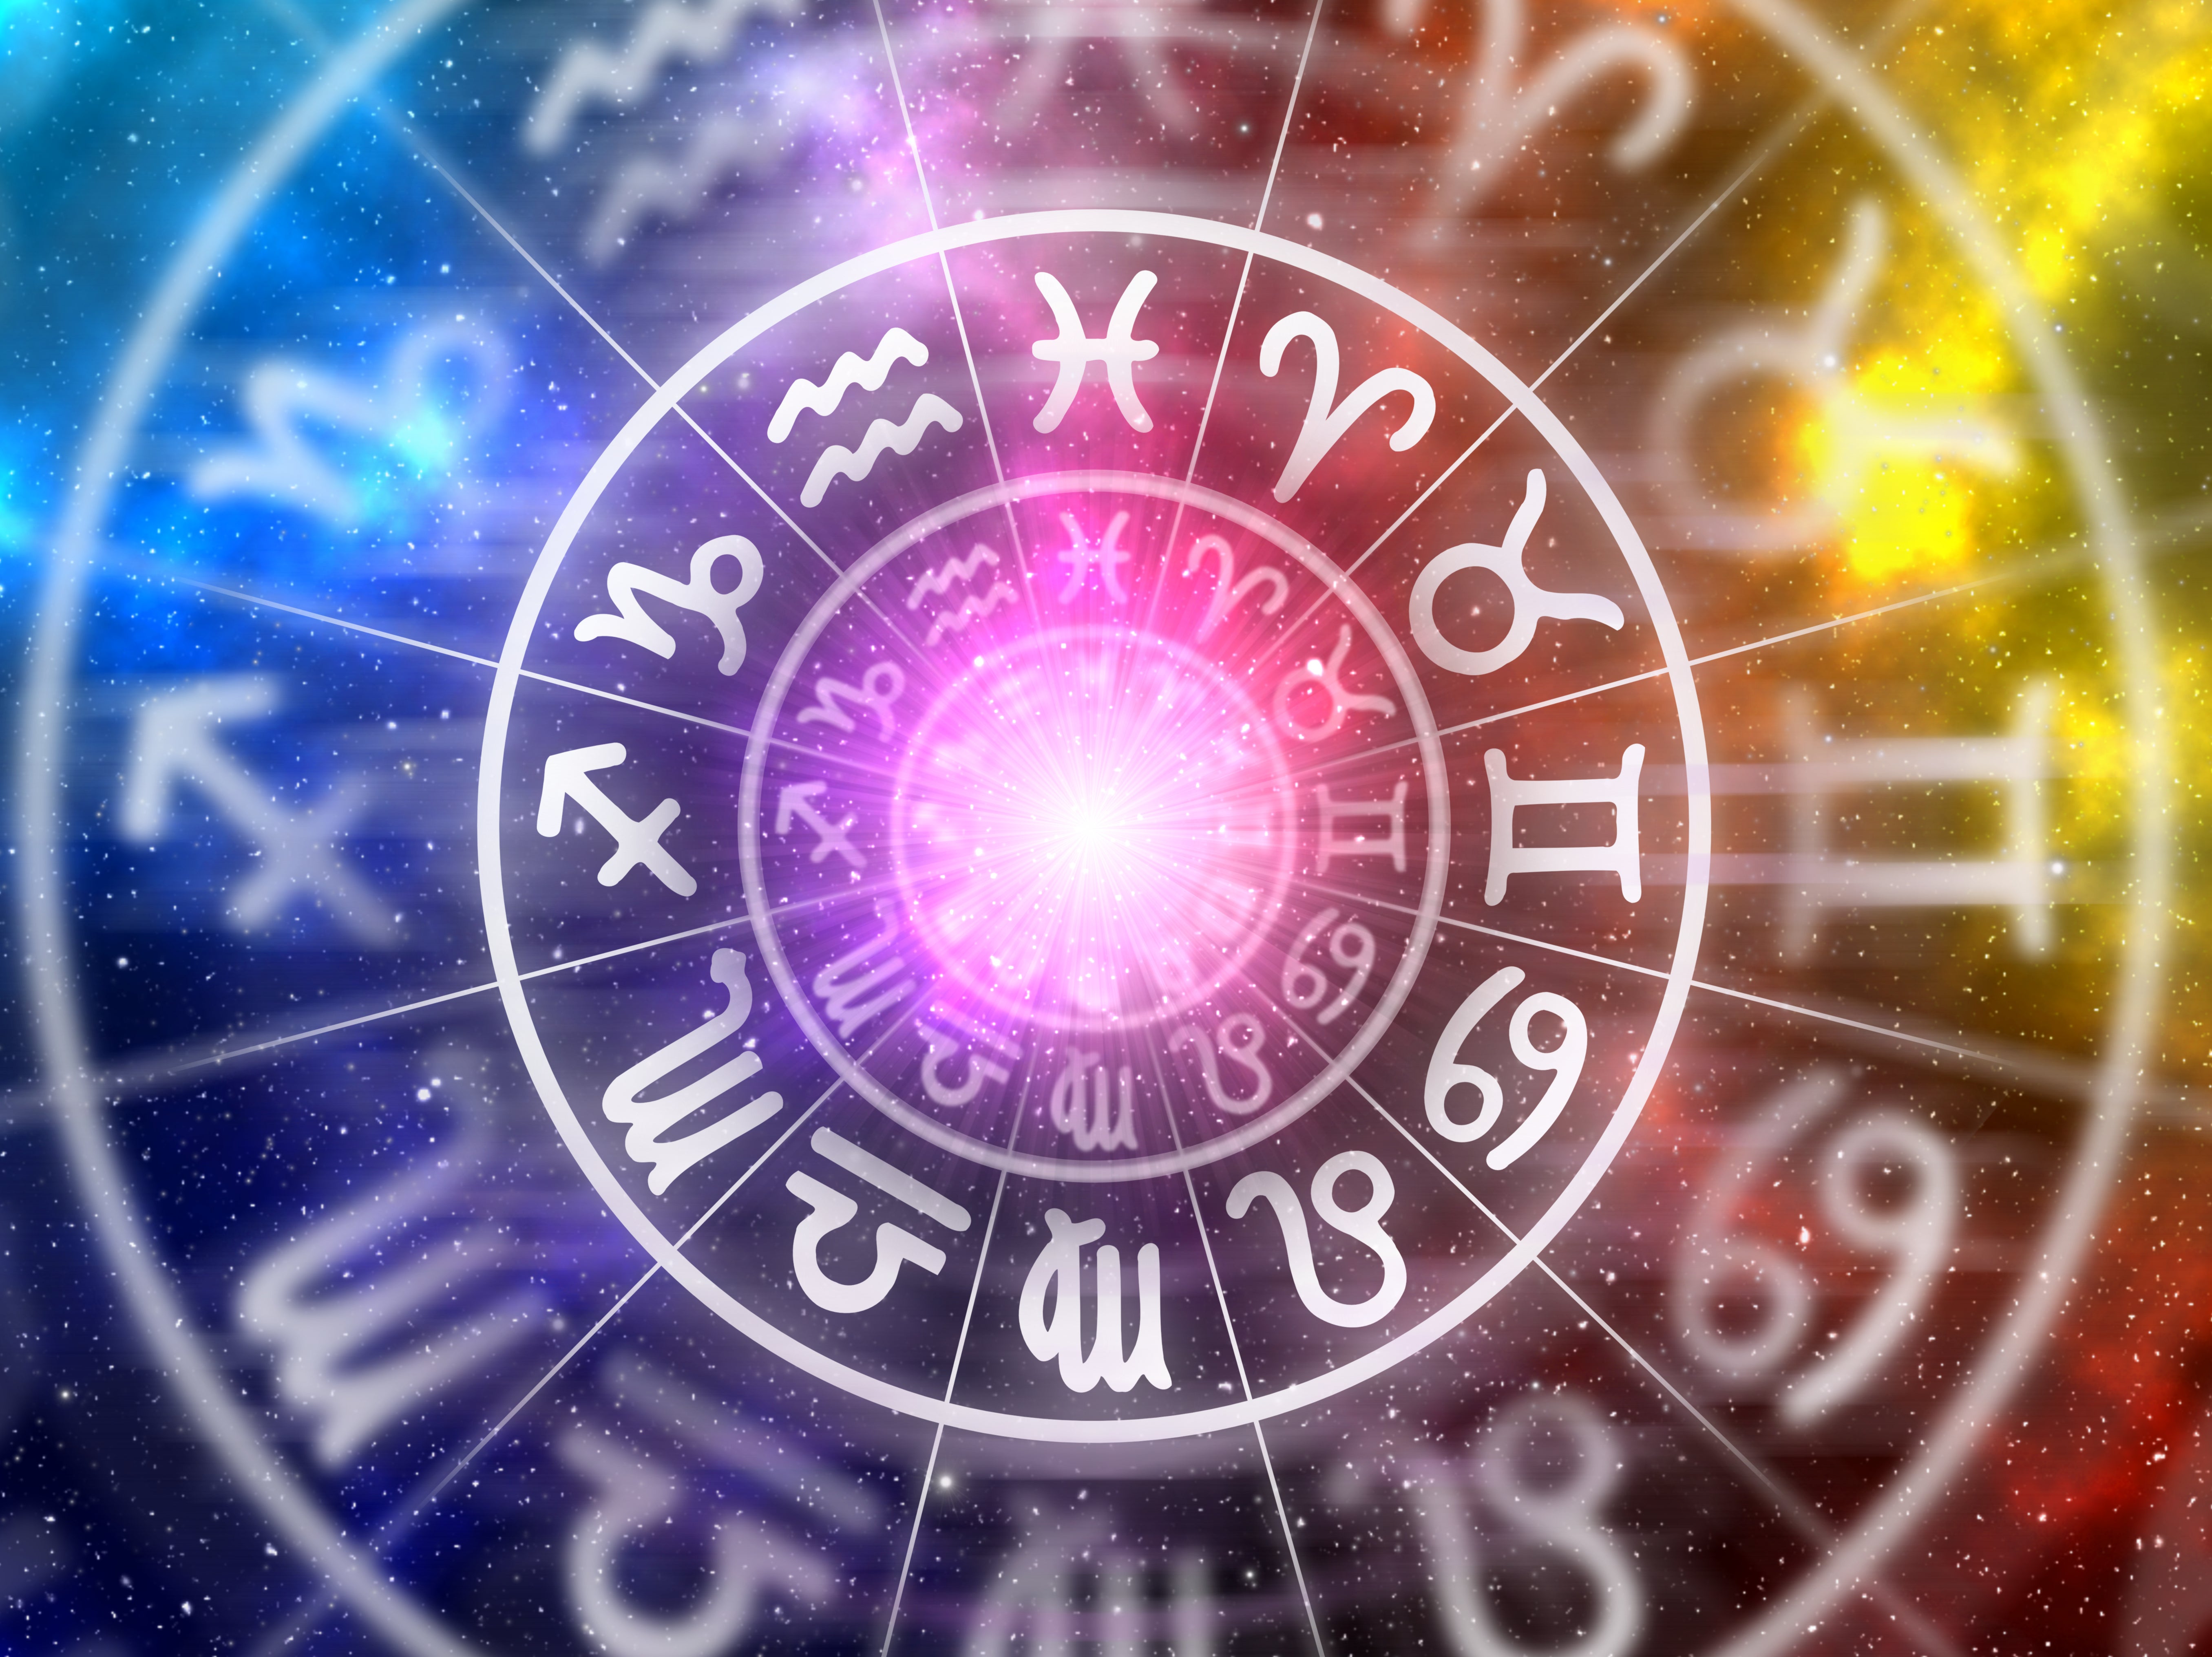 How does “Mercury retrograde” affect you according to your zodiac sign?